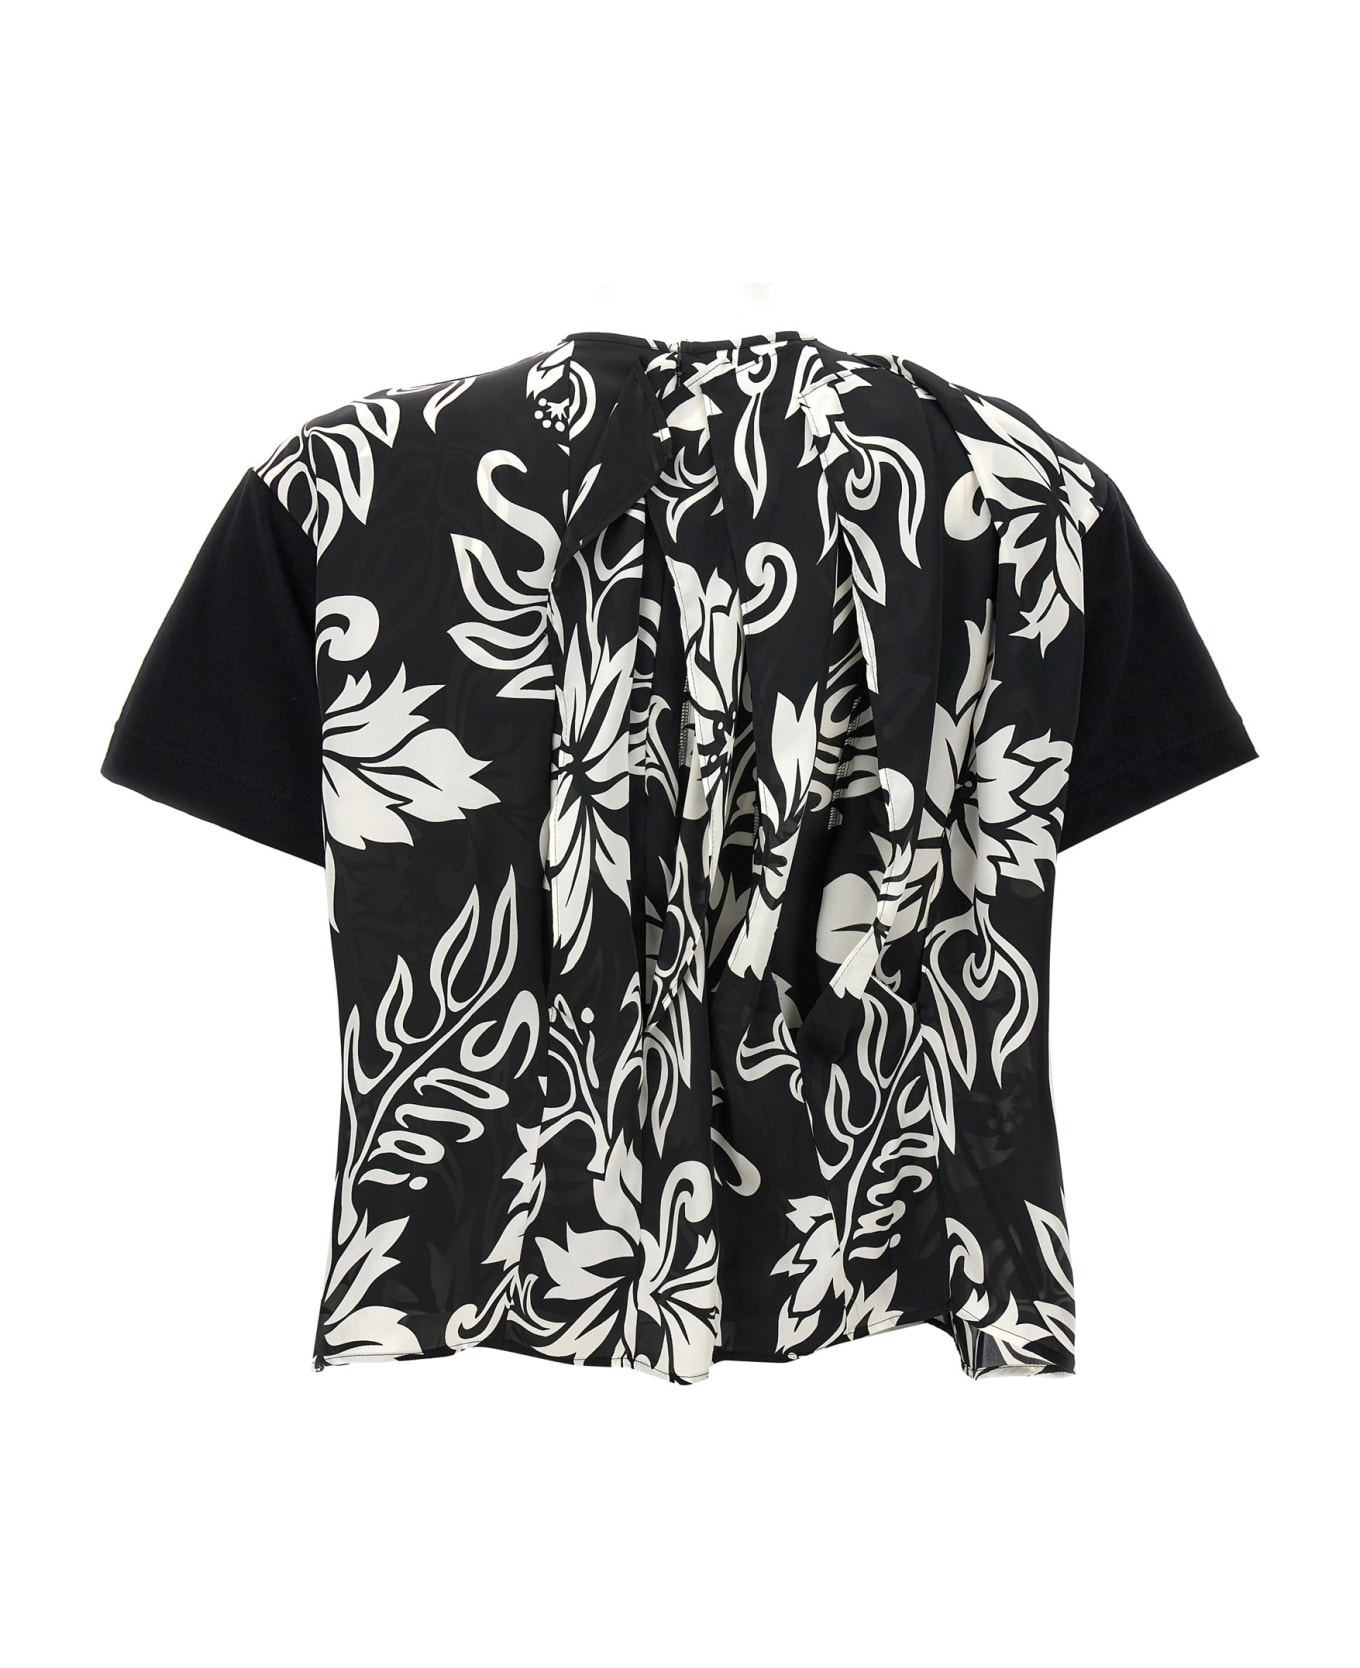 Sacai Floral Print T-shirt - Black